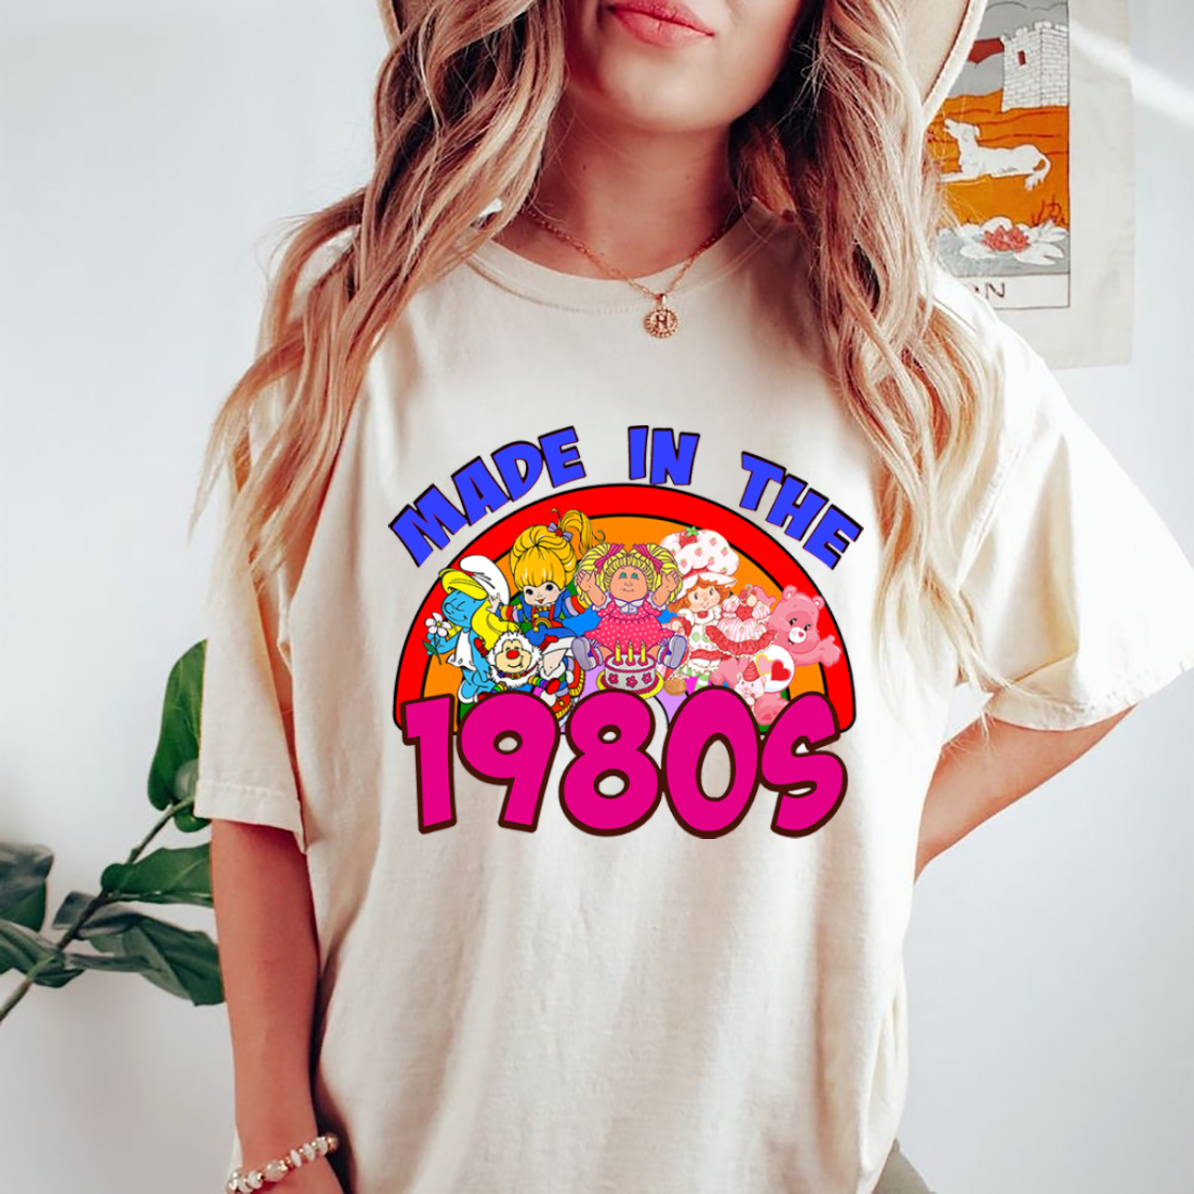 Made In The 80ss Shirt, Made in the 80s Cartoon V-Neck, Birthday Party Tee, Rainbow Brite Shirt, Strawberry Shortcake Shirt, Care bears Shirt